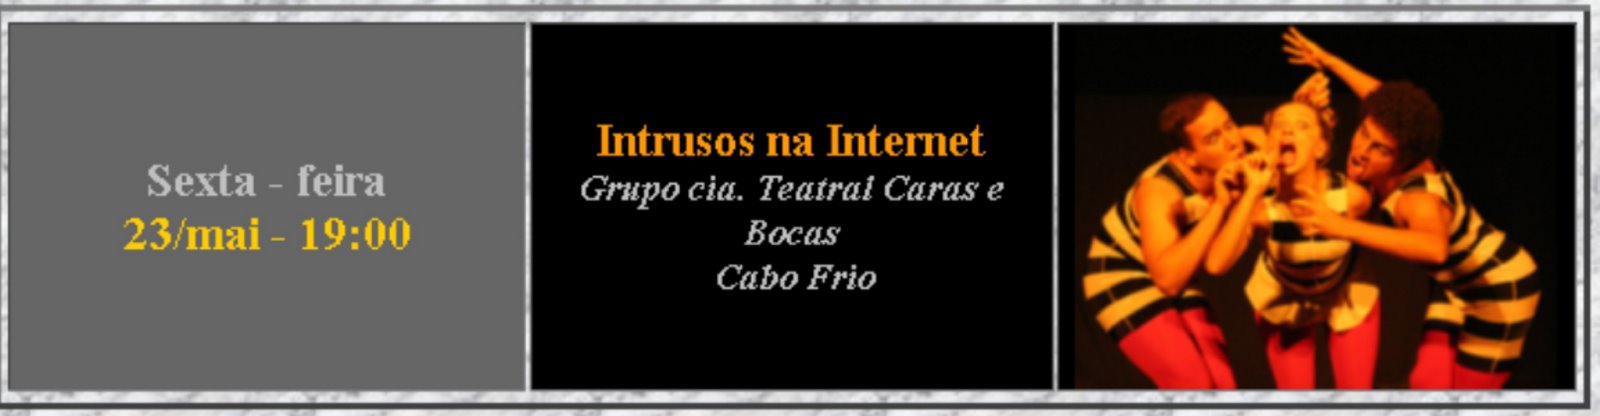 [5.8+Intrusos+na+Internet+d.JPG]